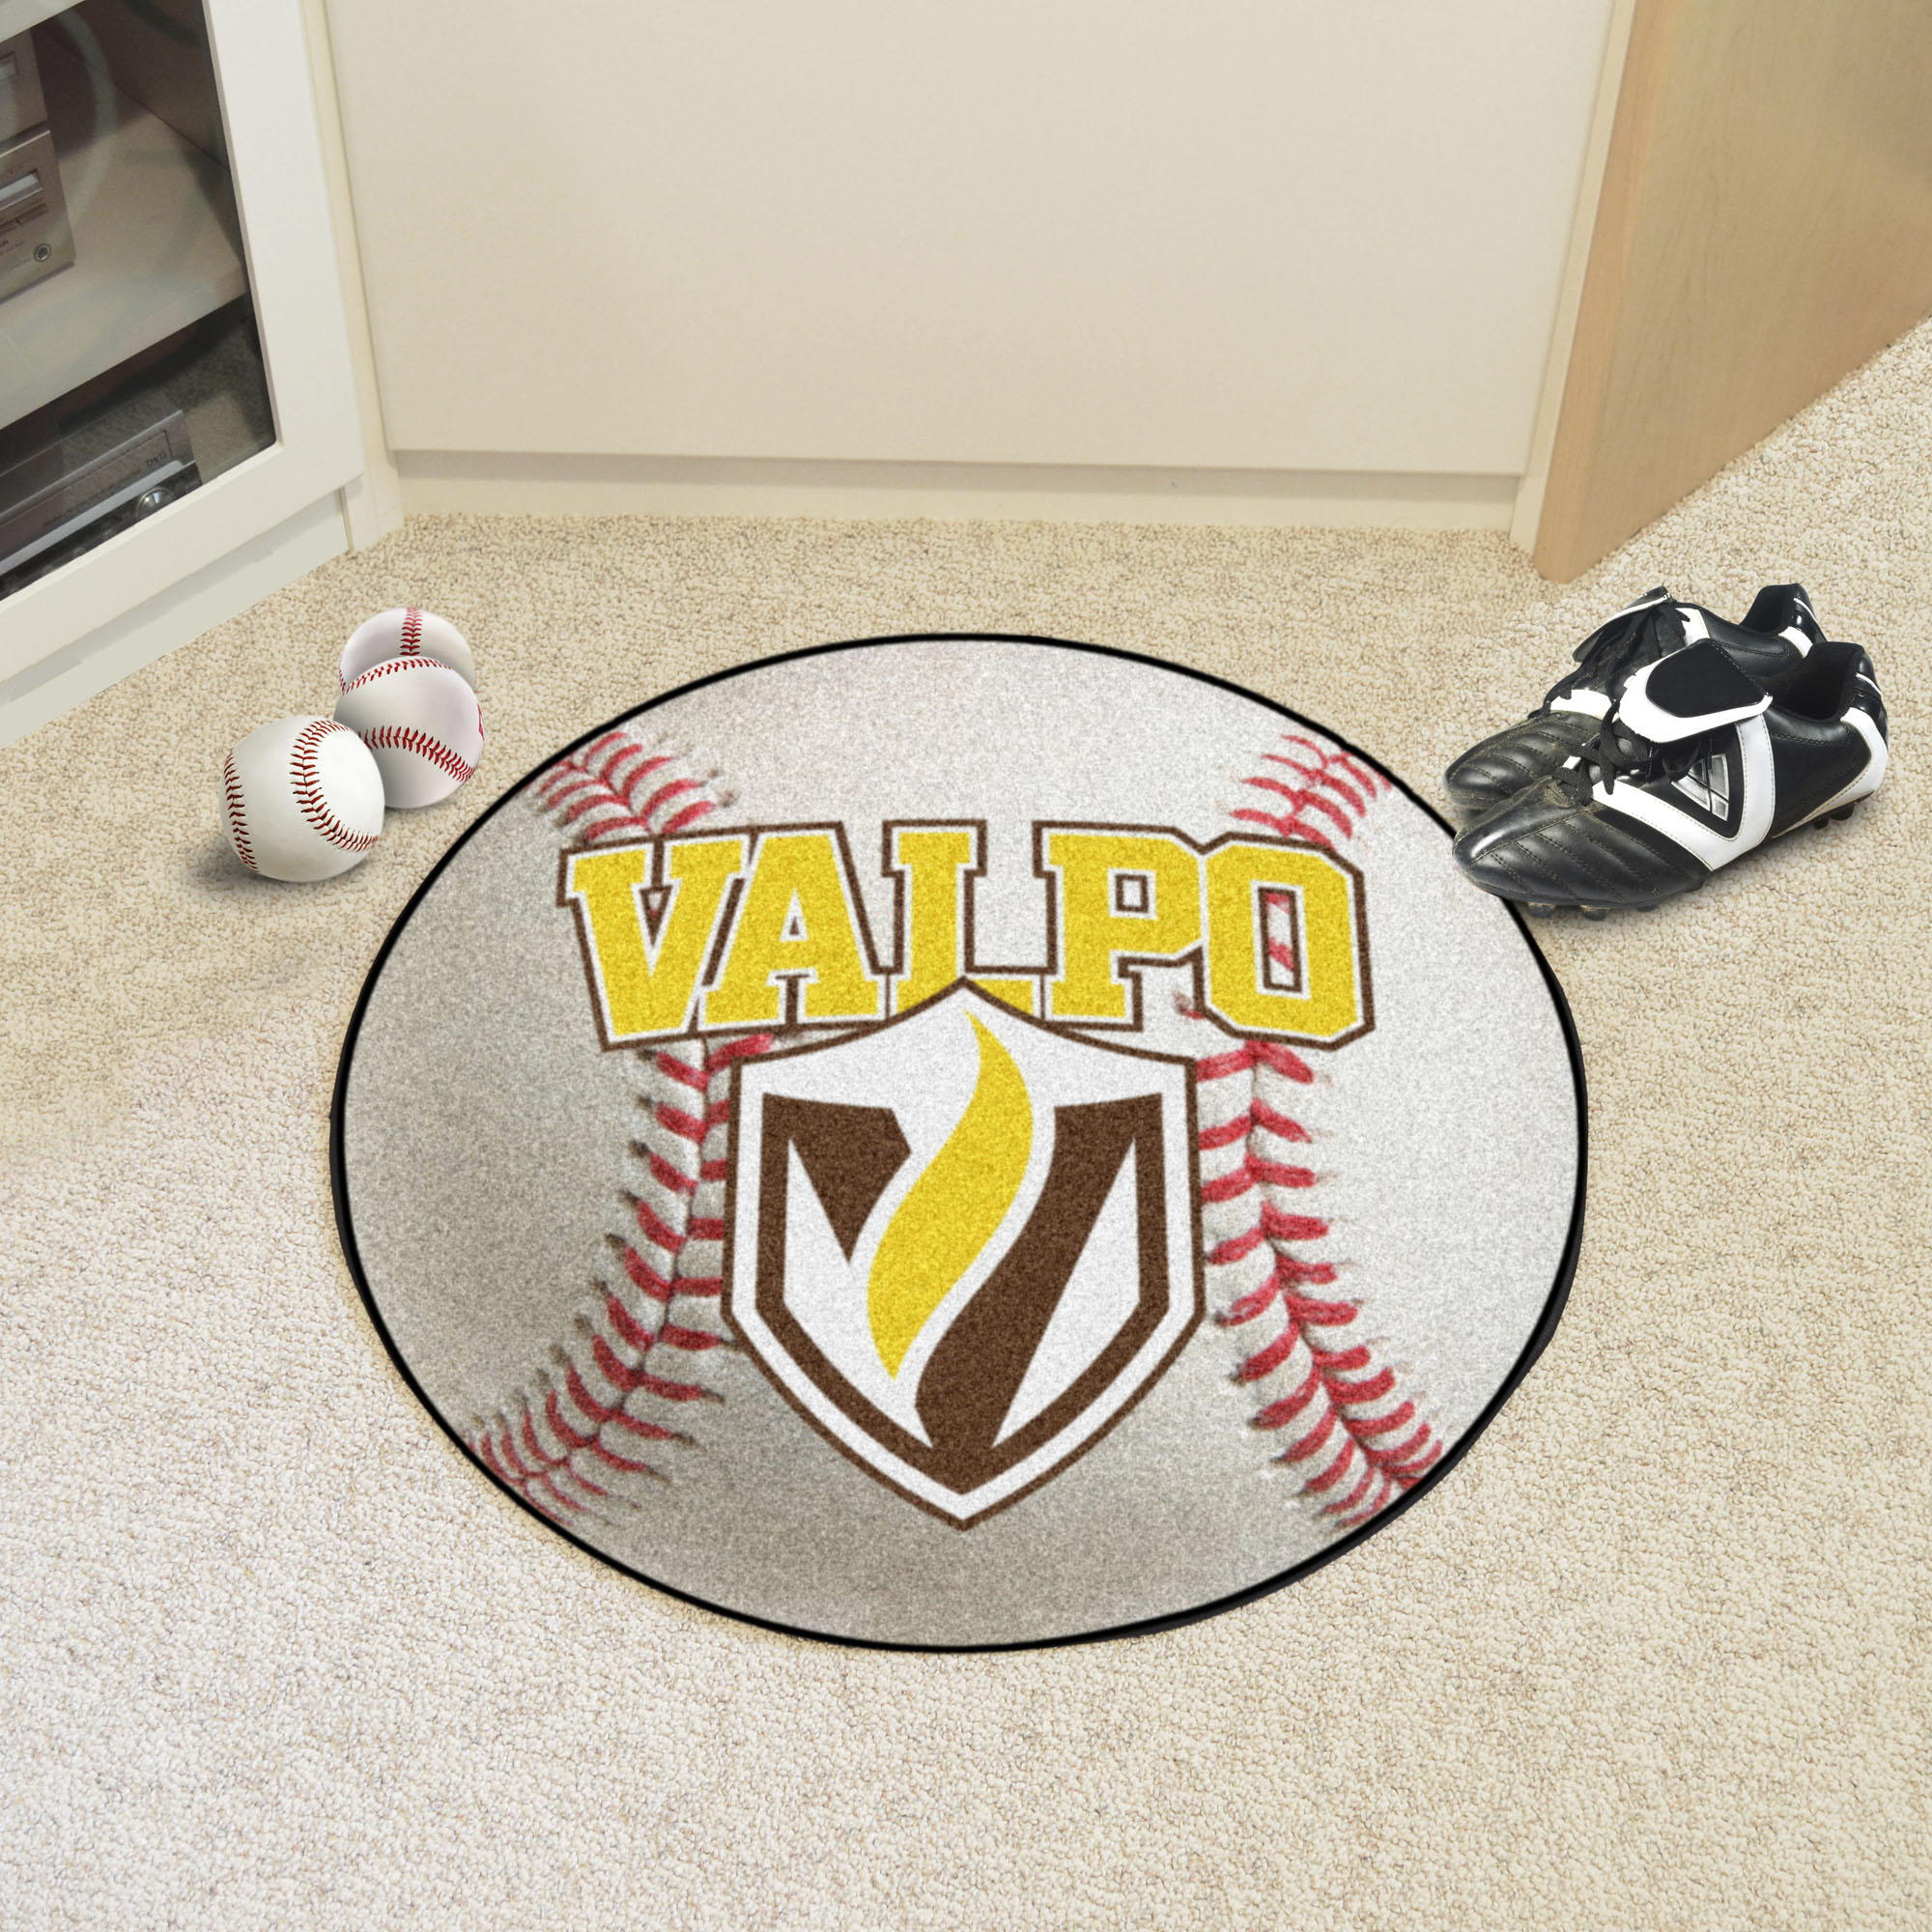 Valparaiso Baseball Mat 27" diameter - image 2 of 2